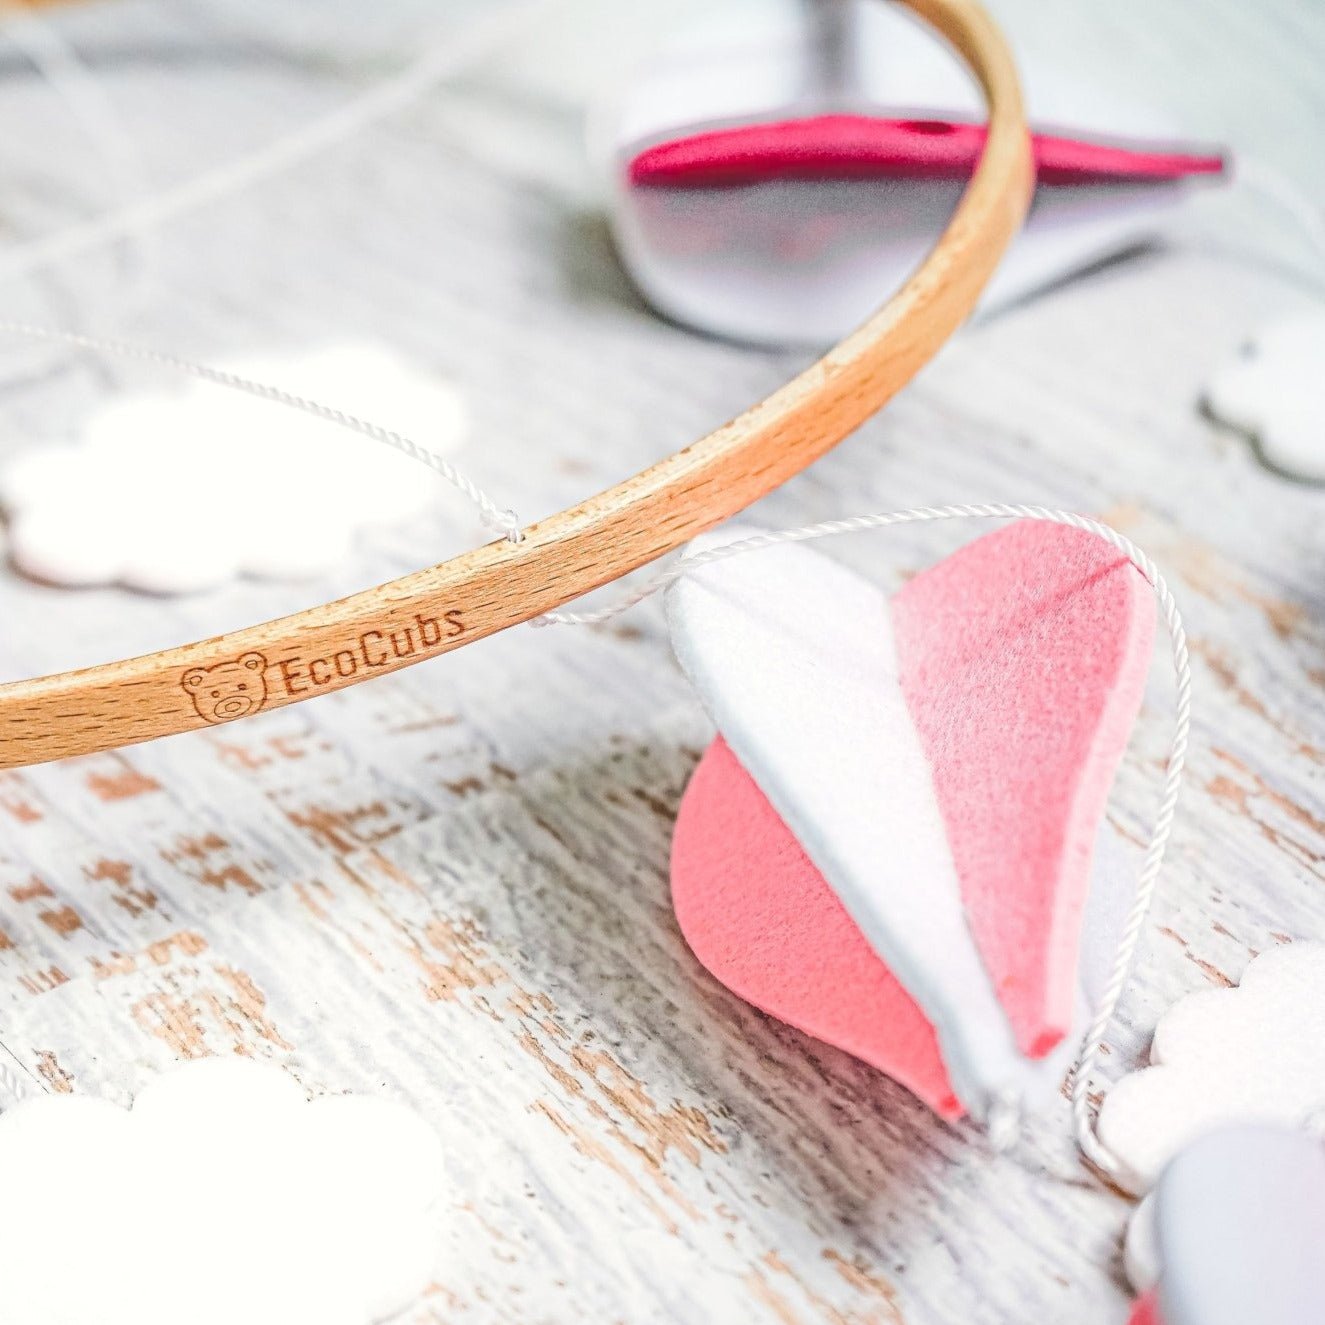 Handmade Crib Mobile- Magenta, Blush Pink & White